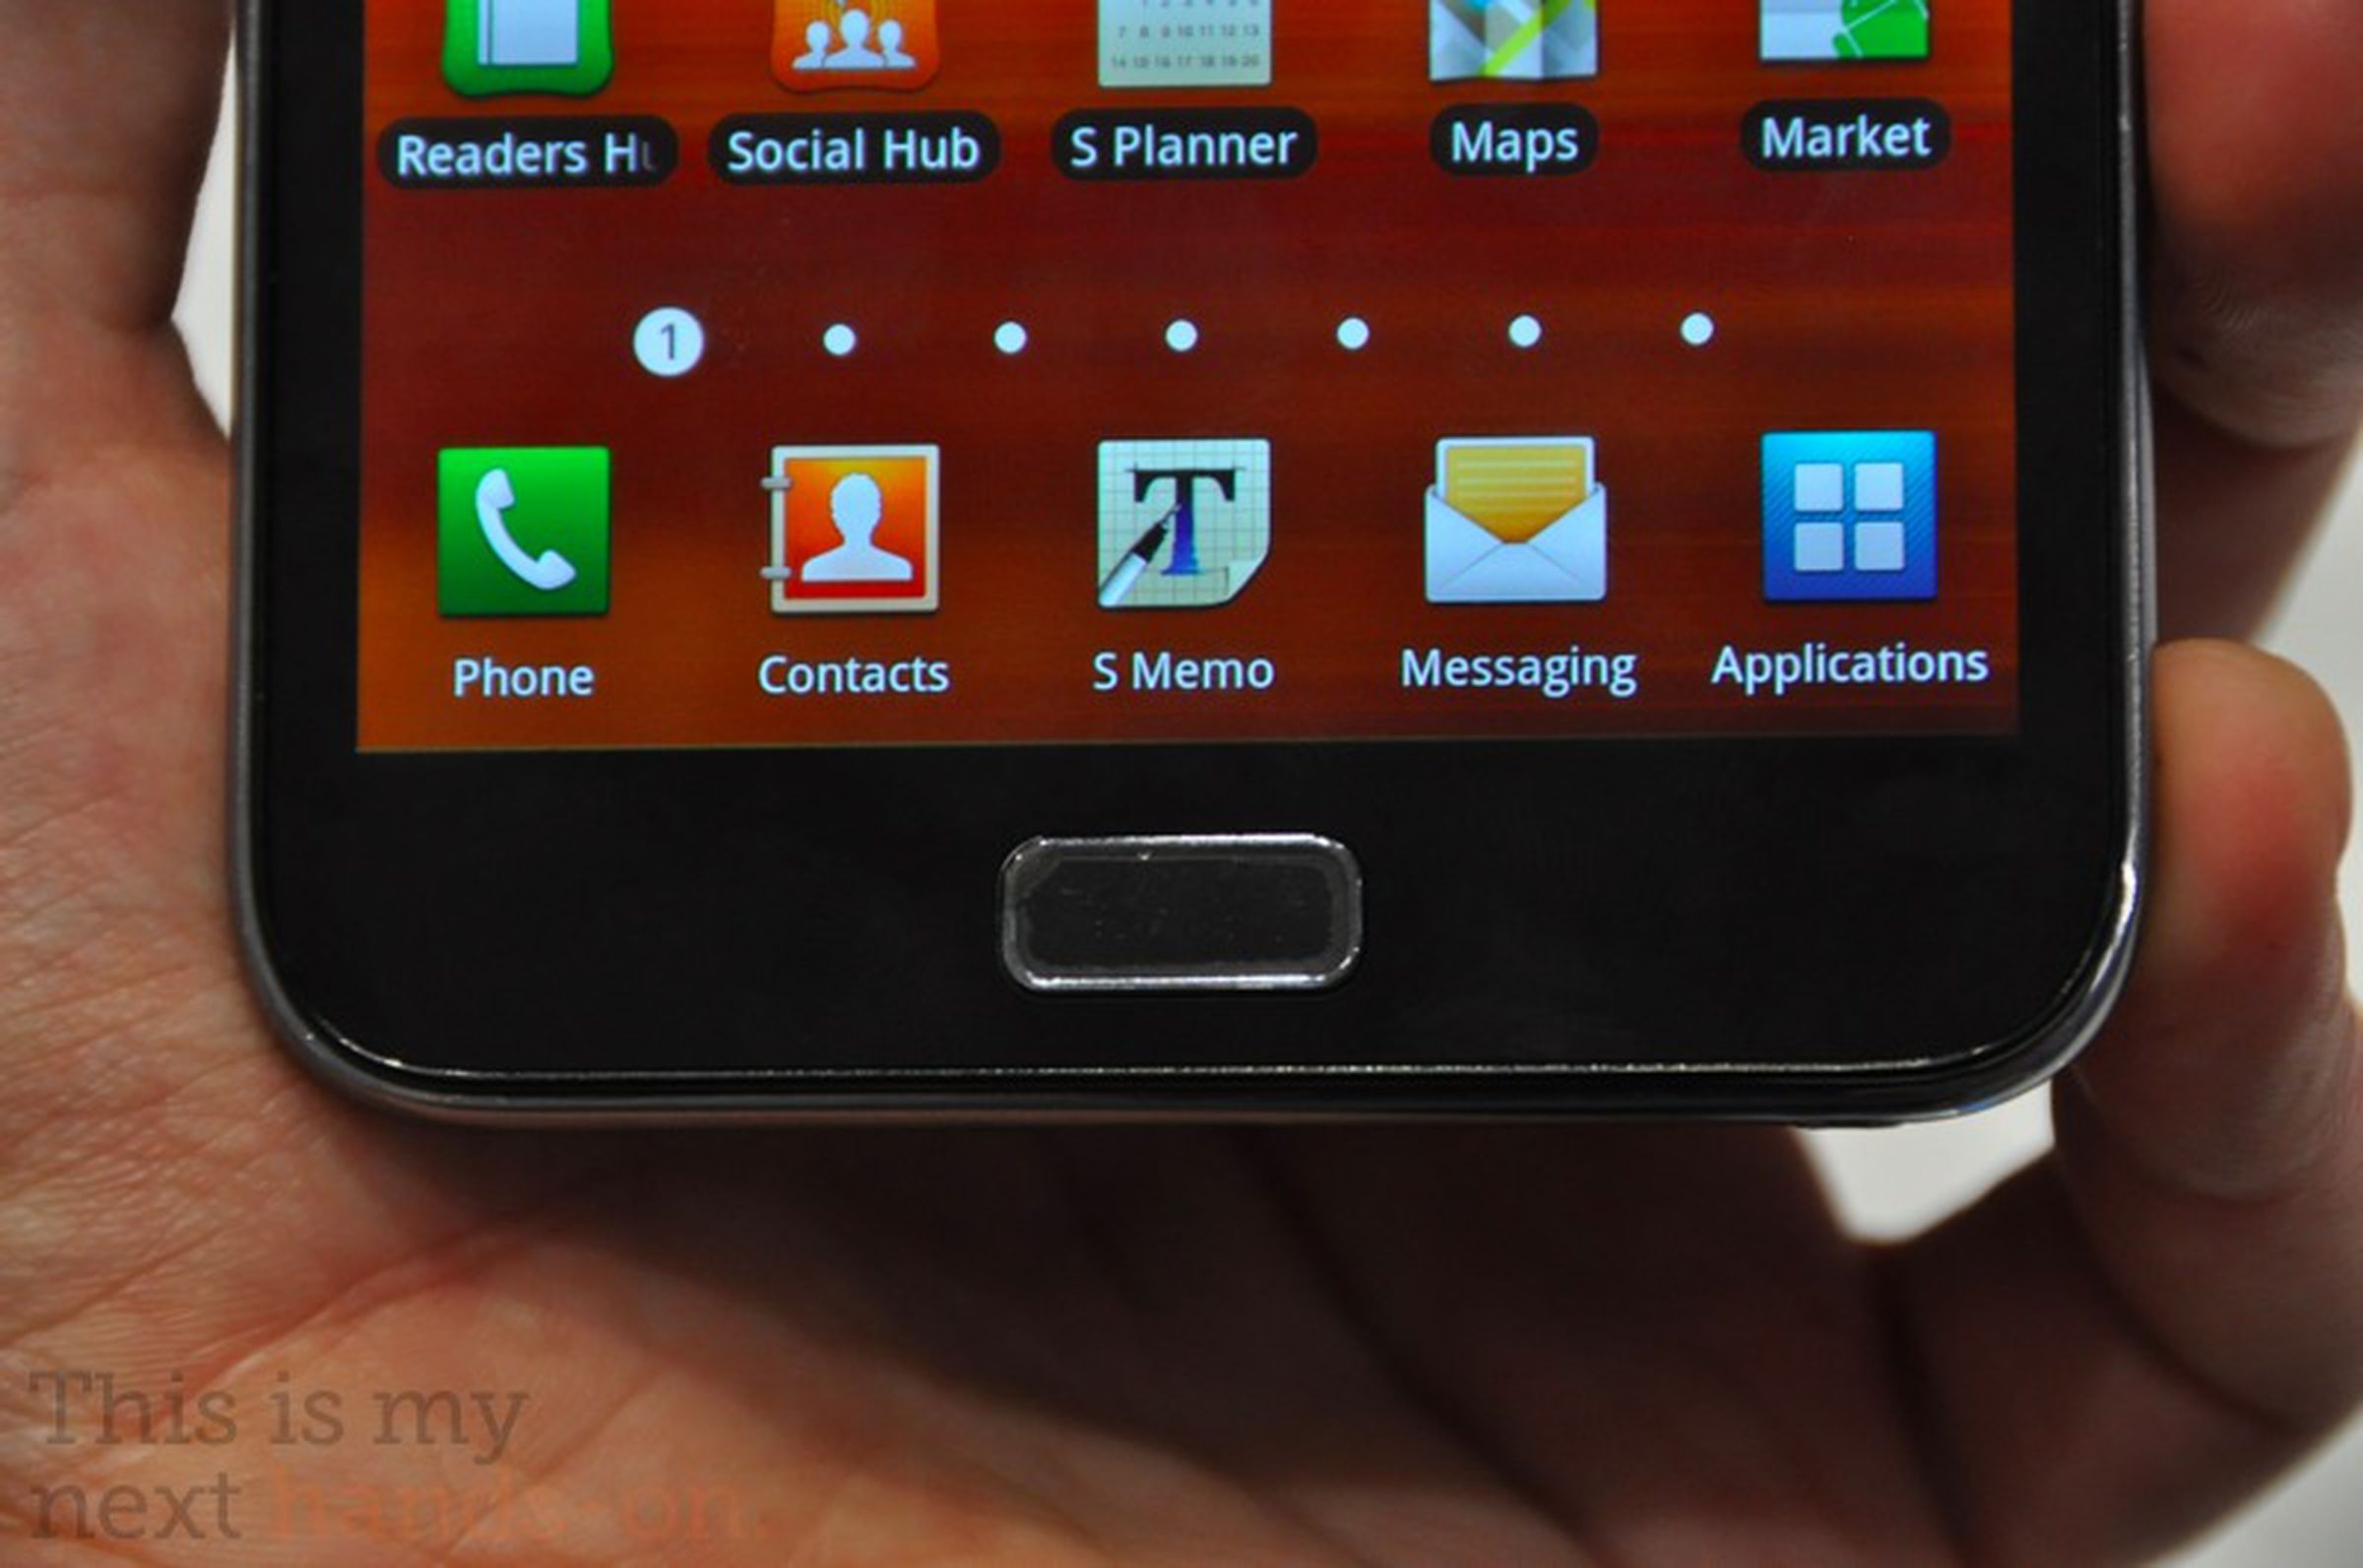 Samsung Galaxy Note hands-on photos